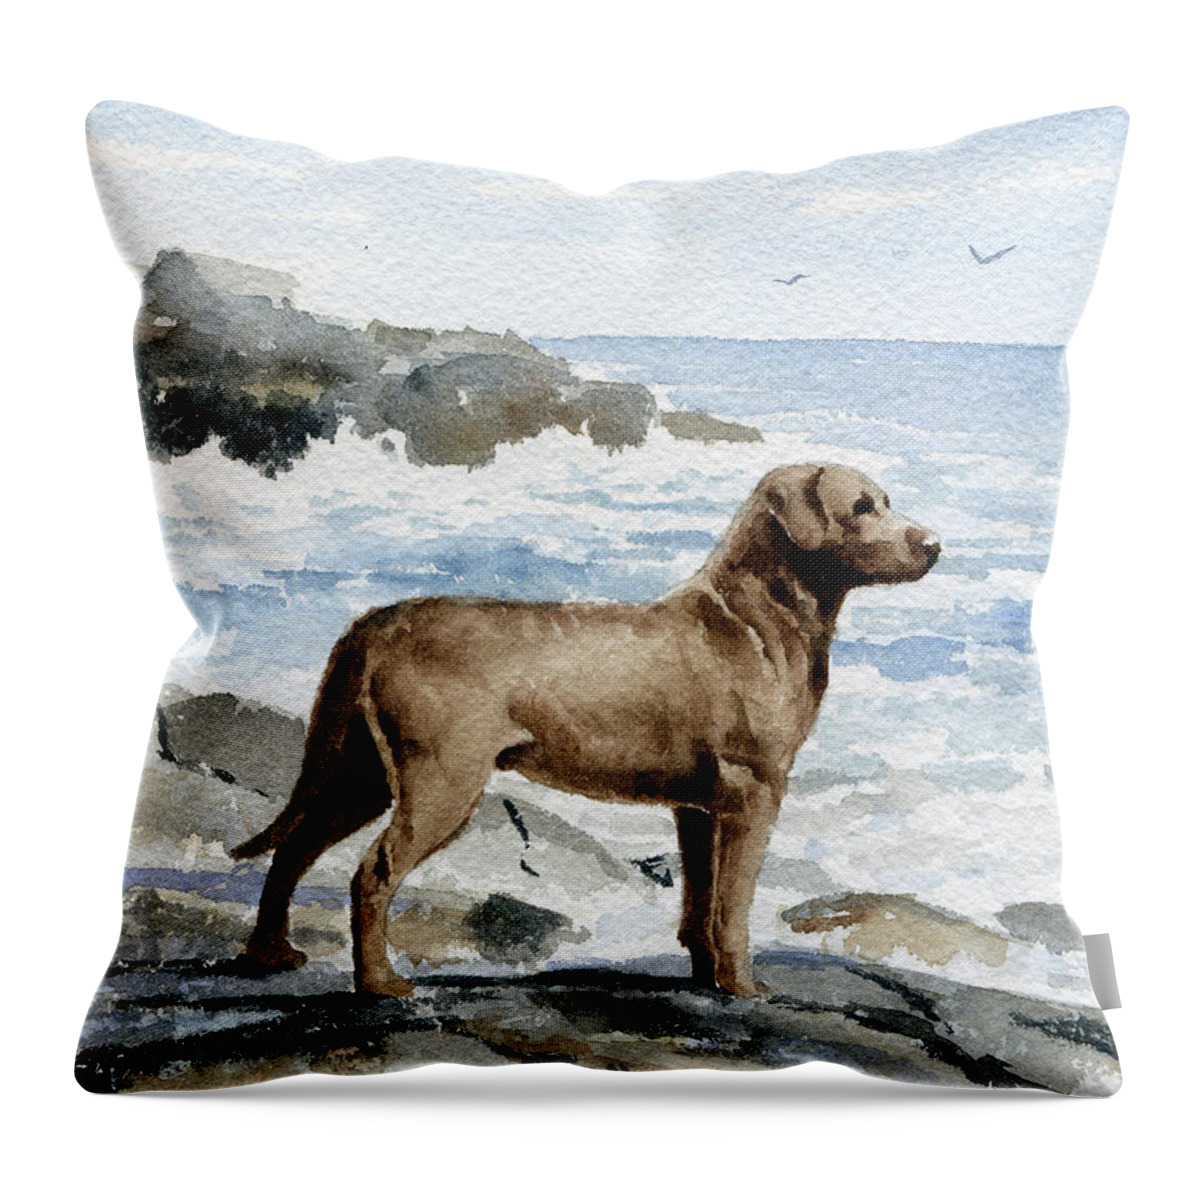 Chesapeake Bay Retriever Throw Pillow featuring the painting Chesapeake Bay Retriever at the Beach by David Rogers